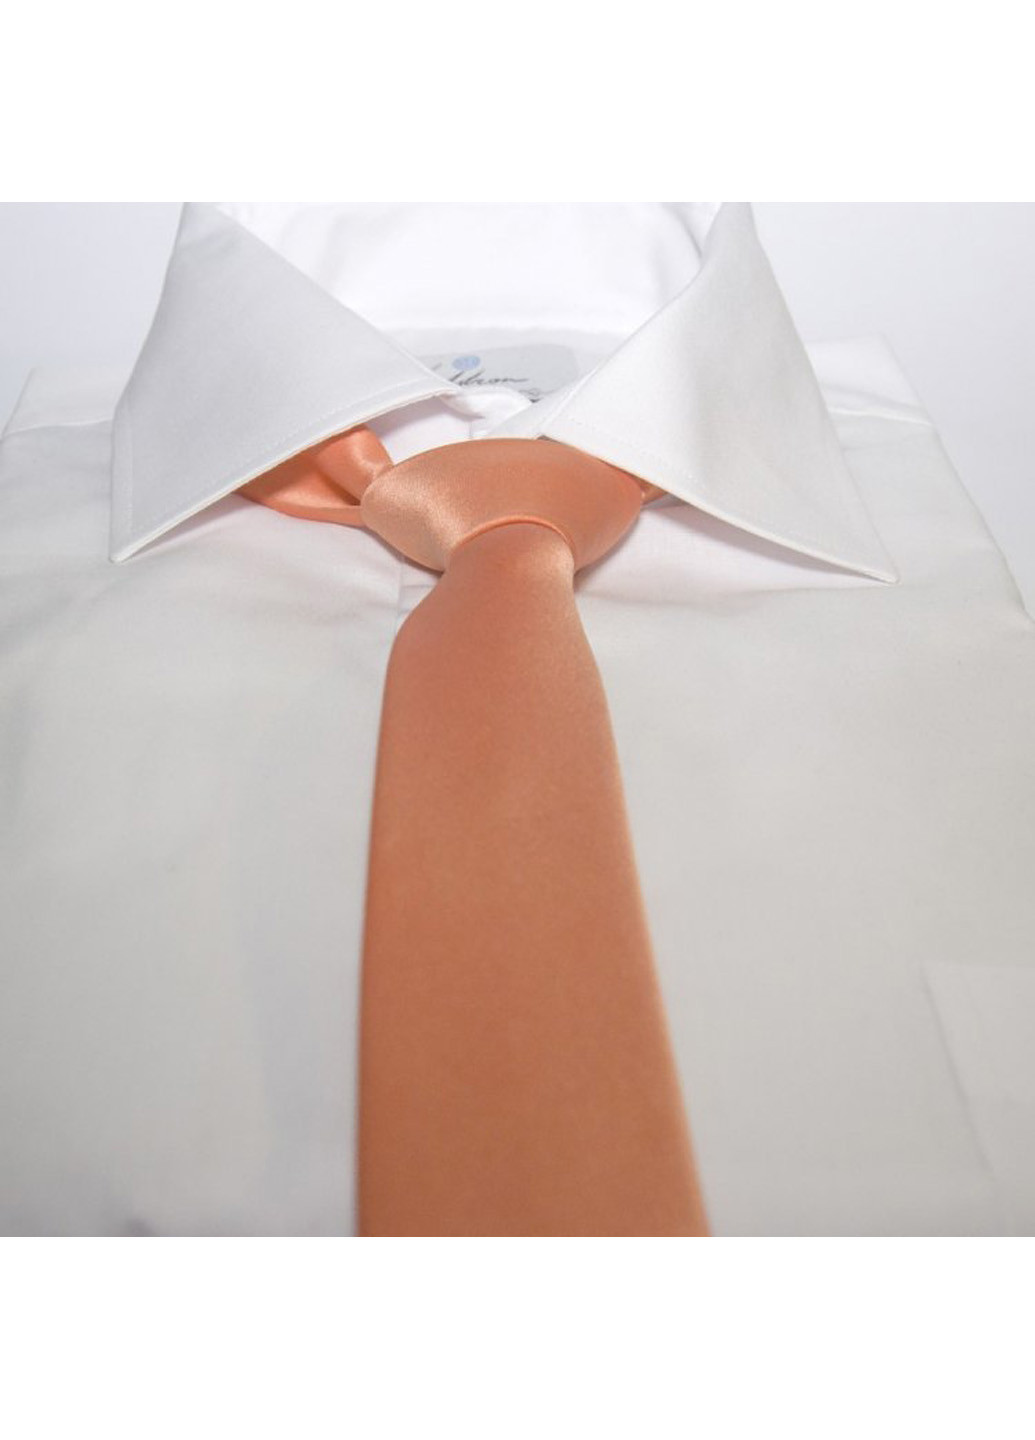 Мужской галстук 5 см Handmade (191127596)